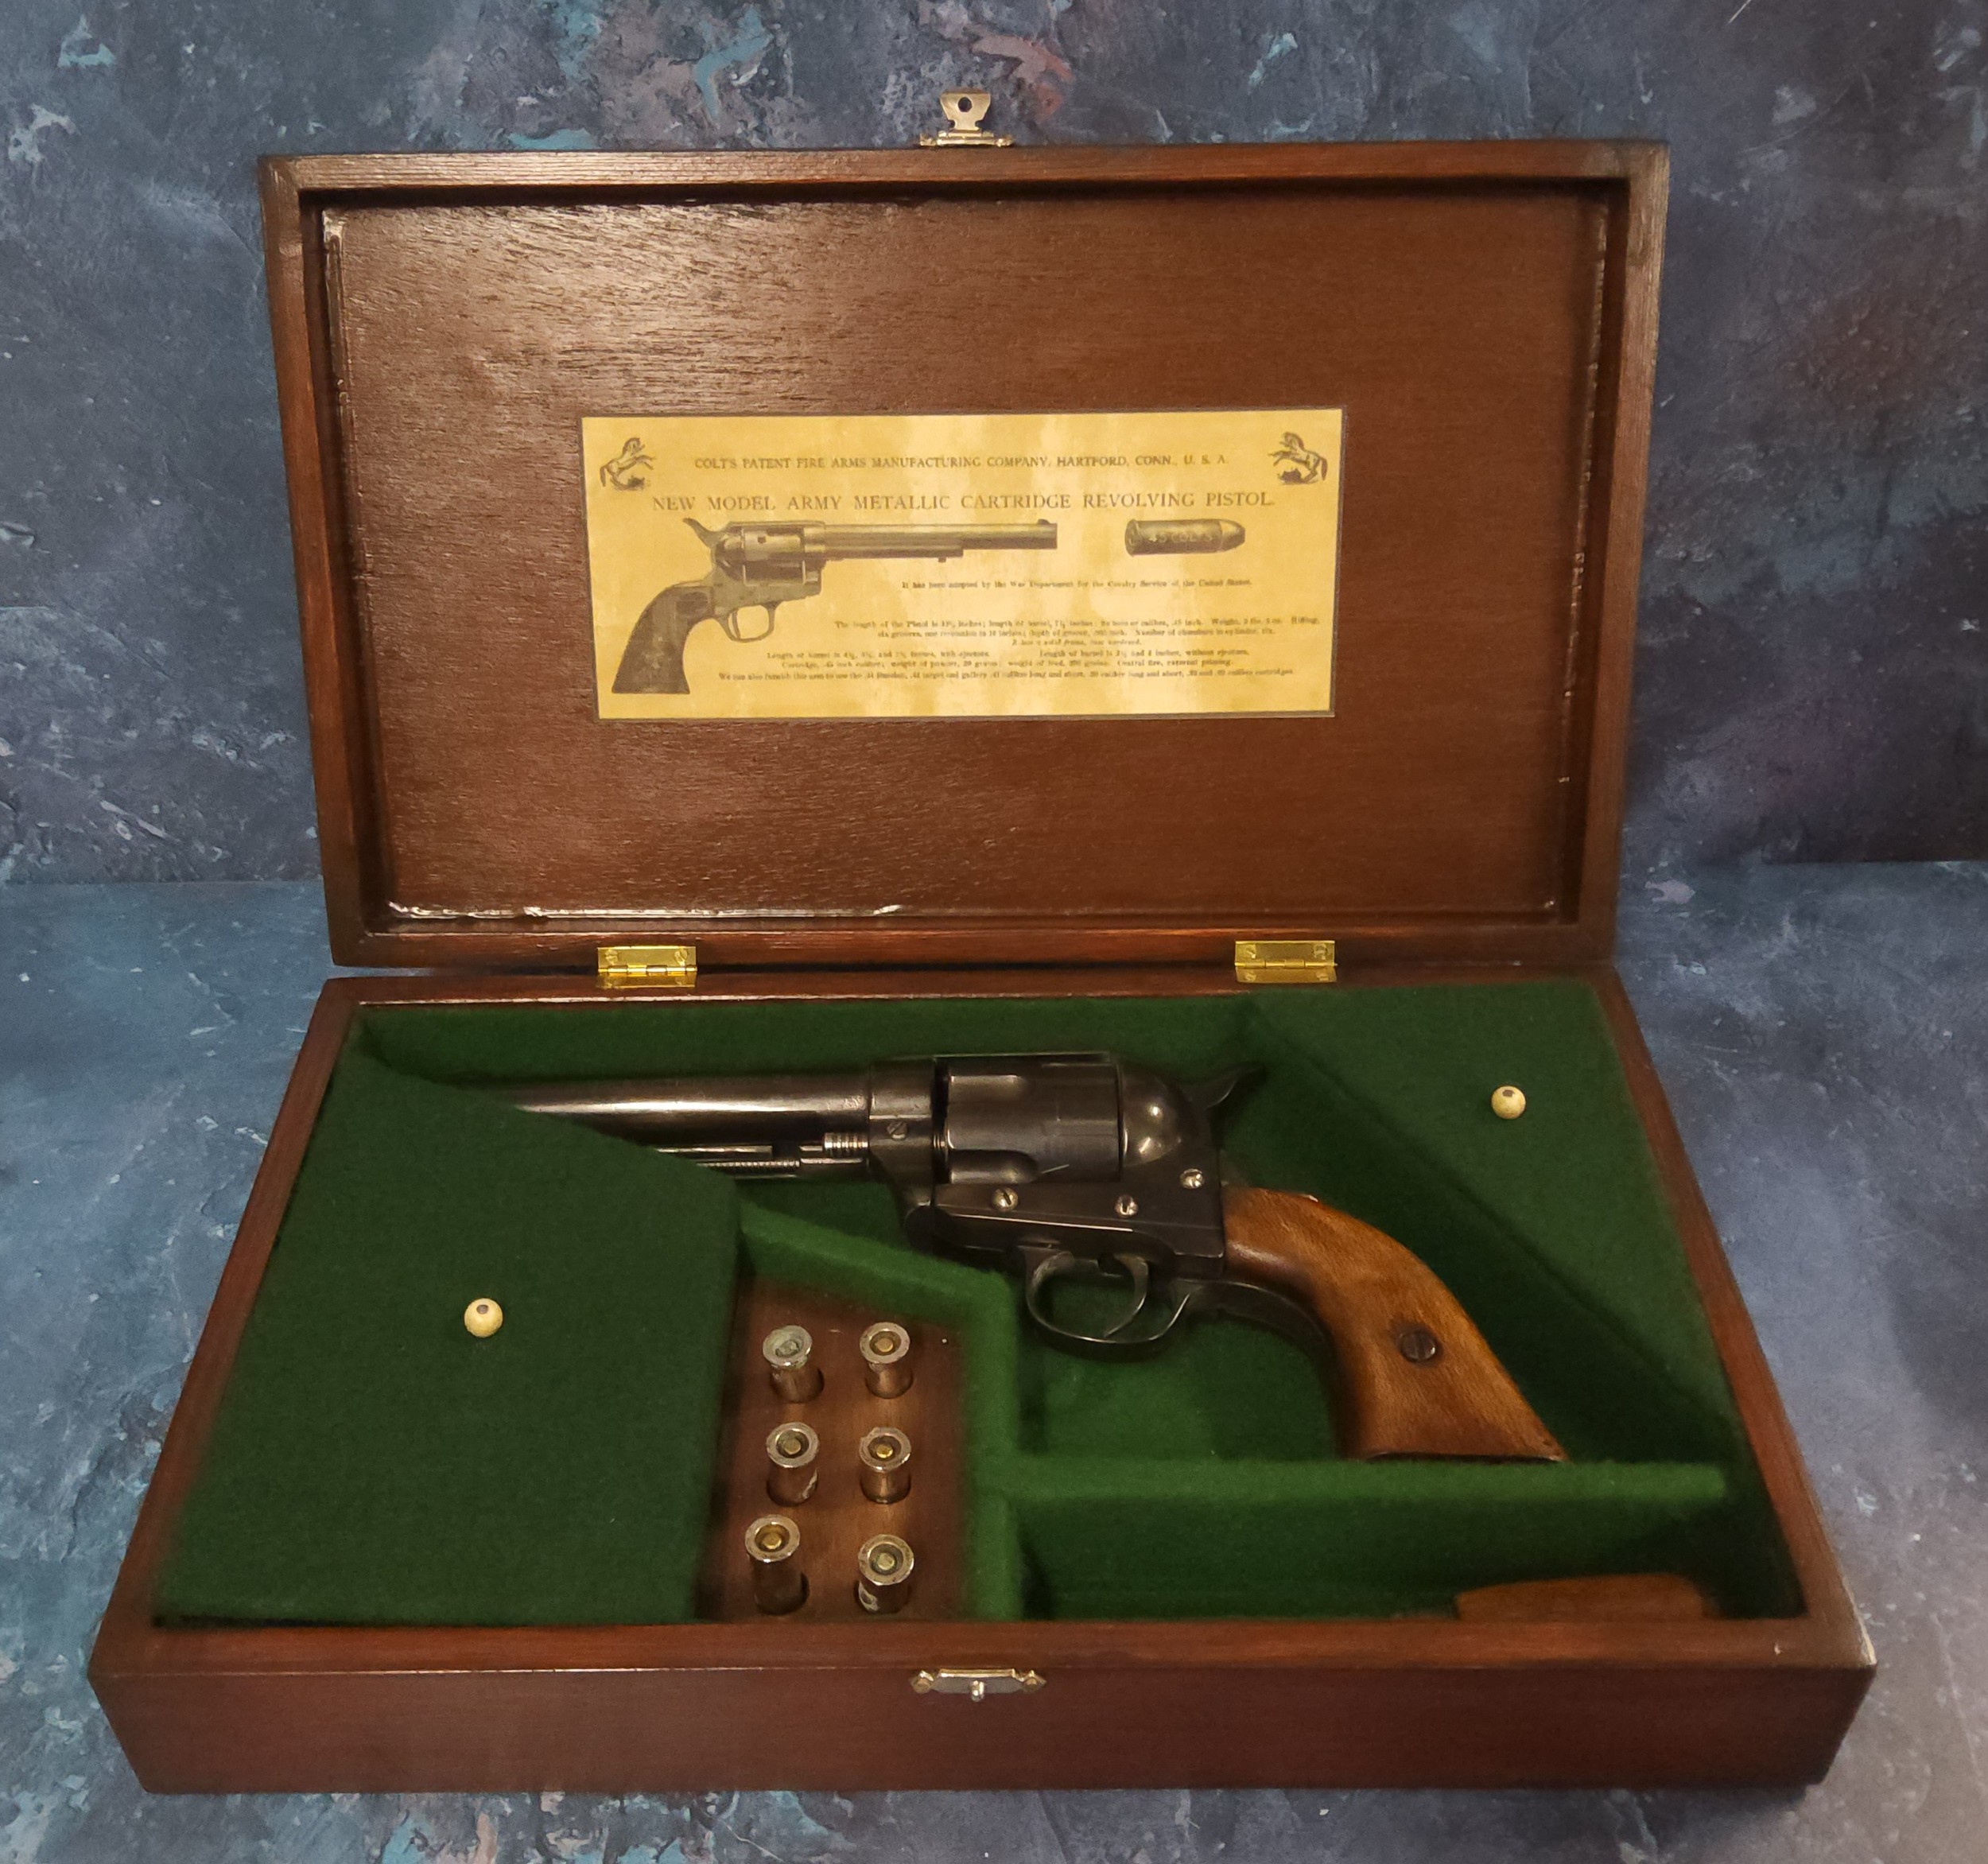 A replica Colt single action army .45 revolver, walnut grip, accessories including six reusable plug